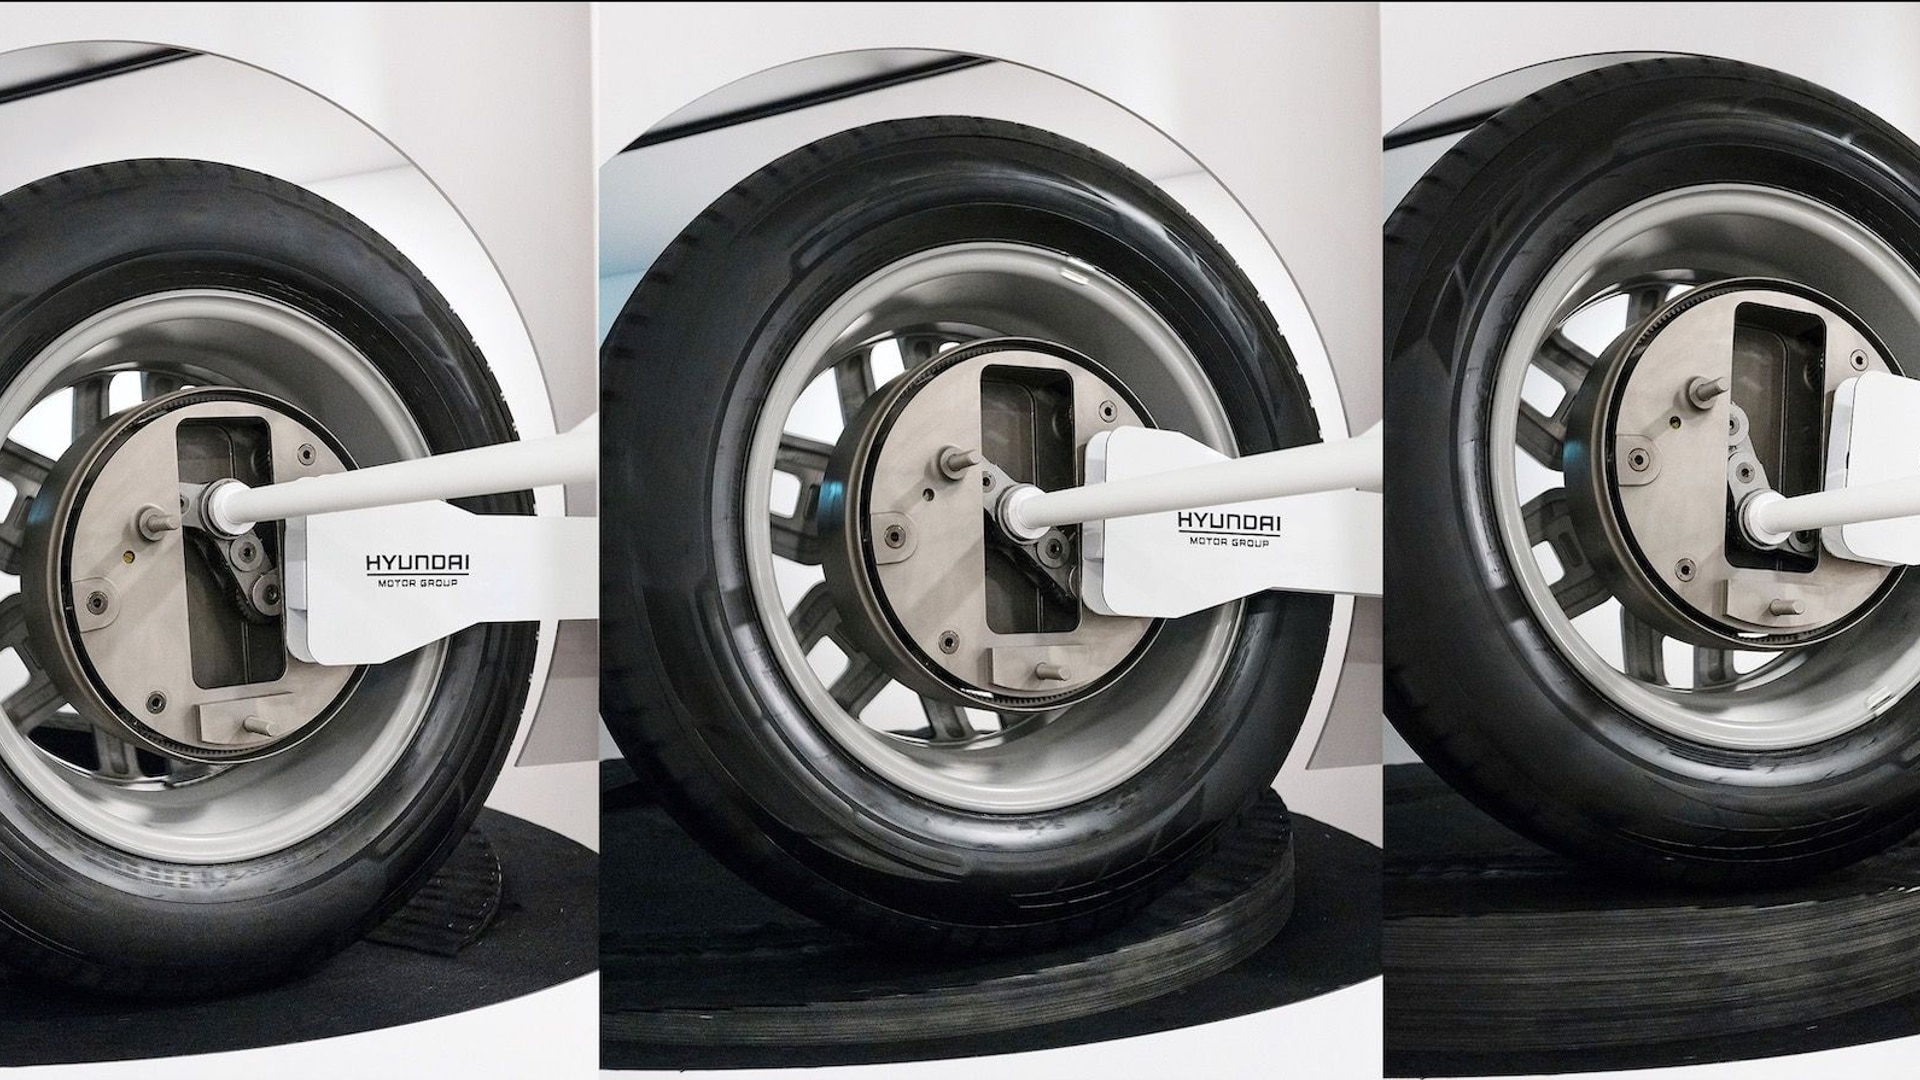 Hyundai and Kia Uni Wheel drive system for EVs